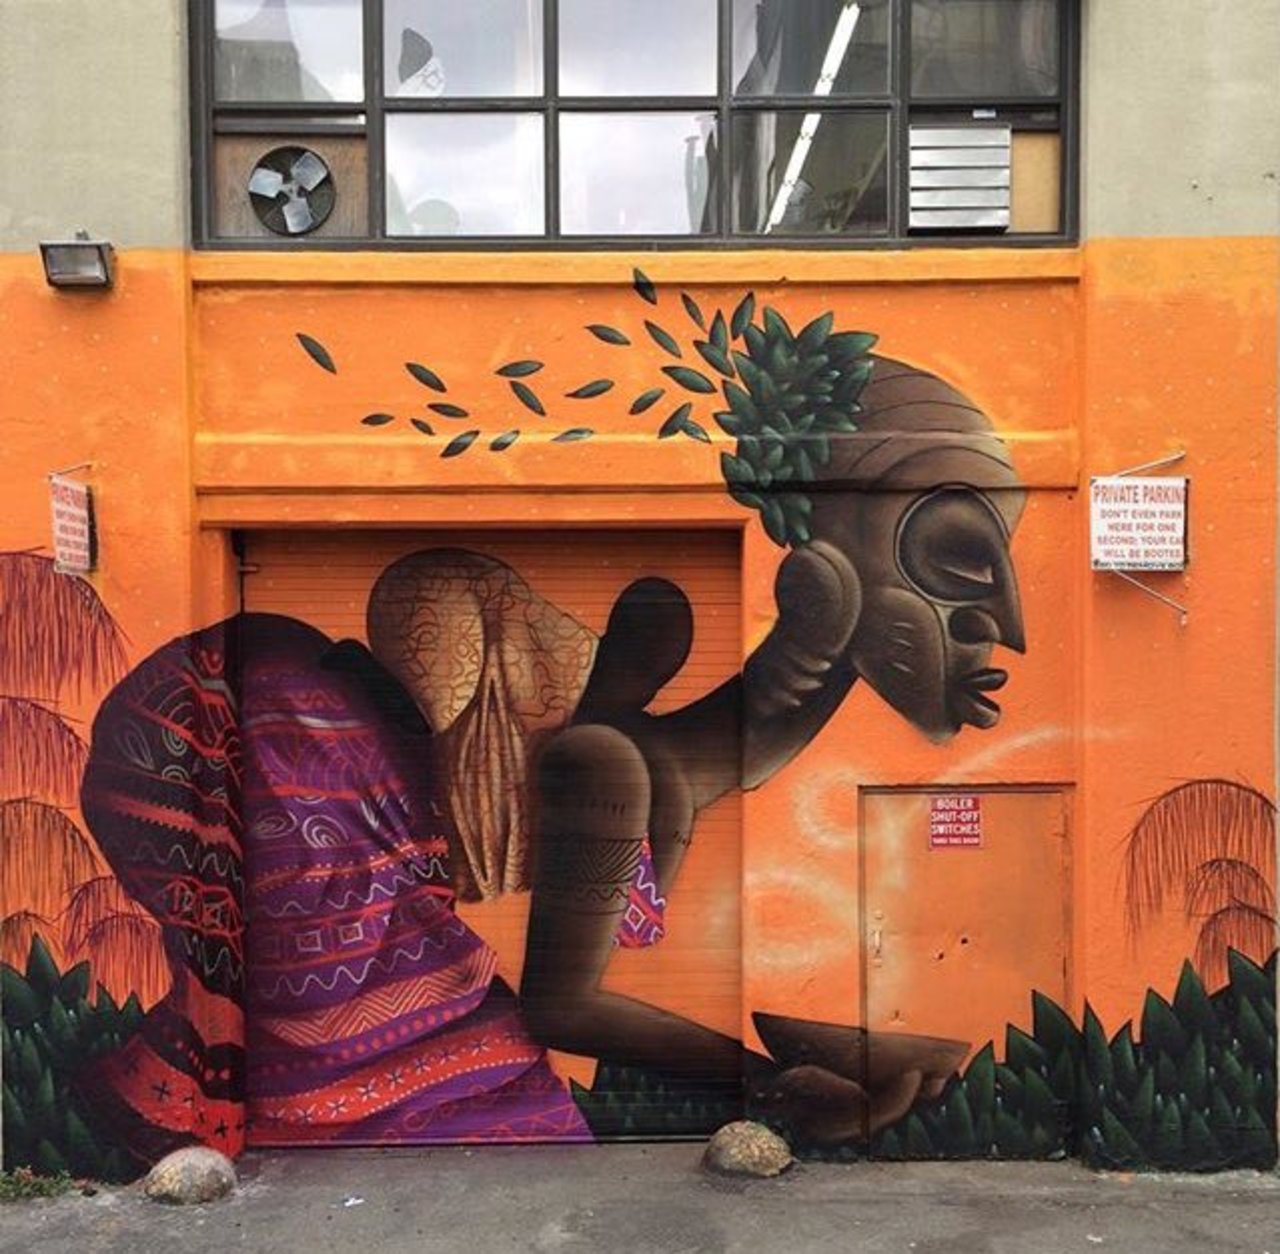 RT @sumairarasheed5: New Street Art by Alexandre Keto in NYC 

#art #graffiti #mural #streetart https://t.co/yamCwUUsTs